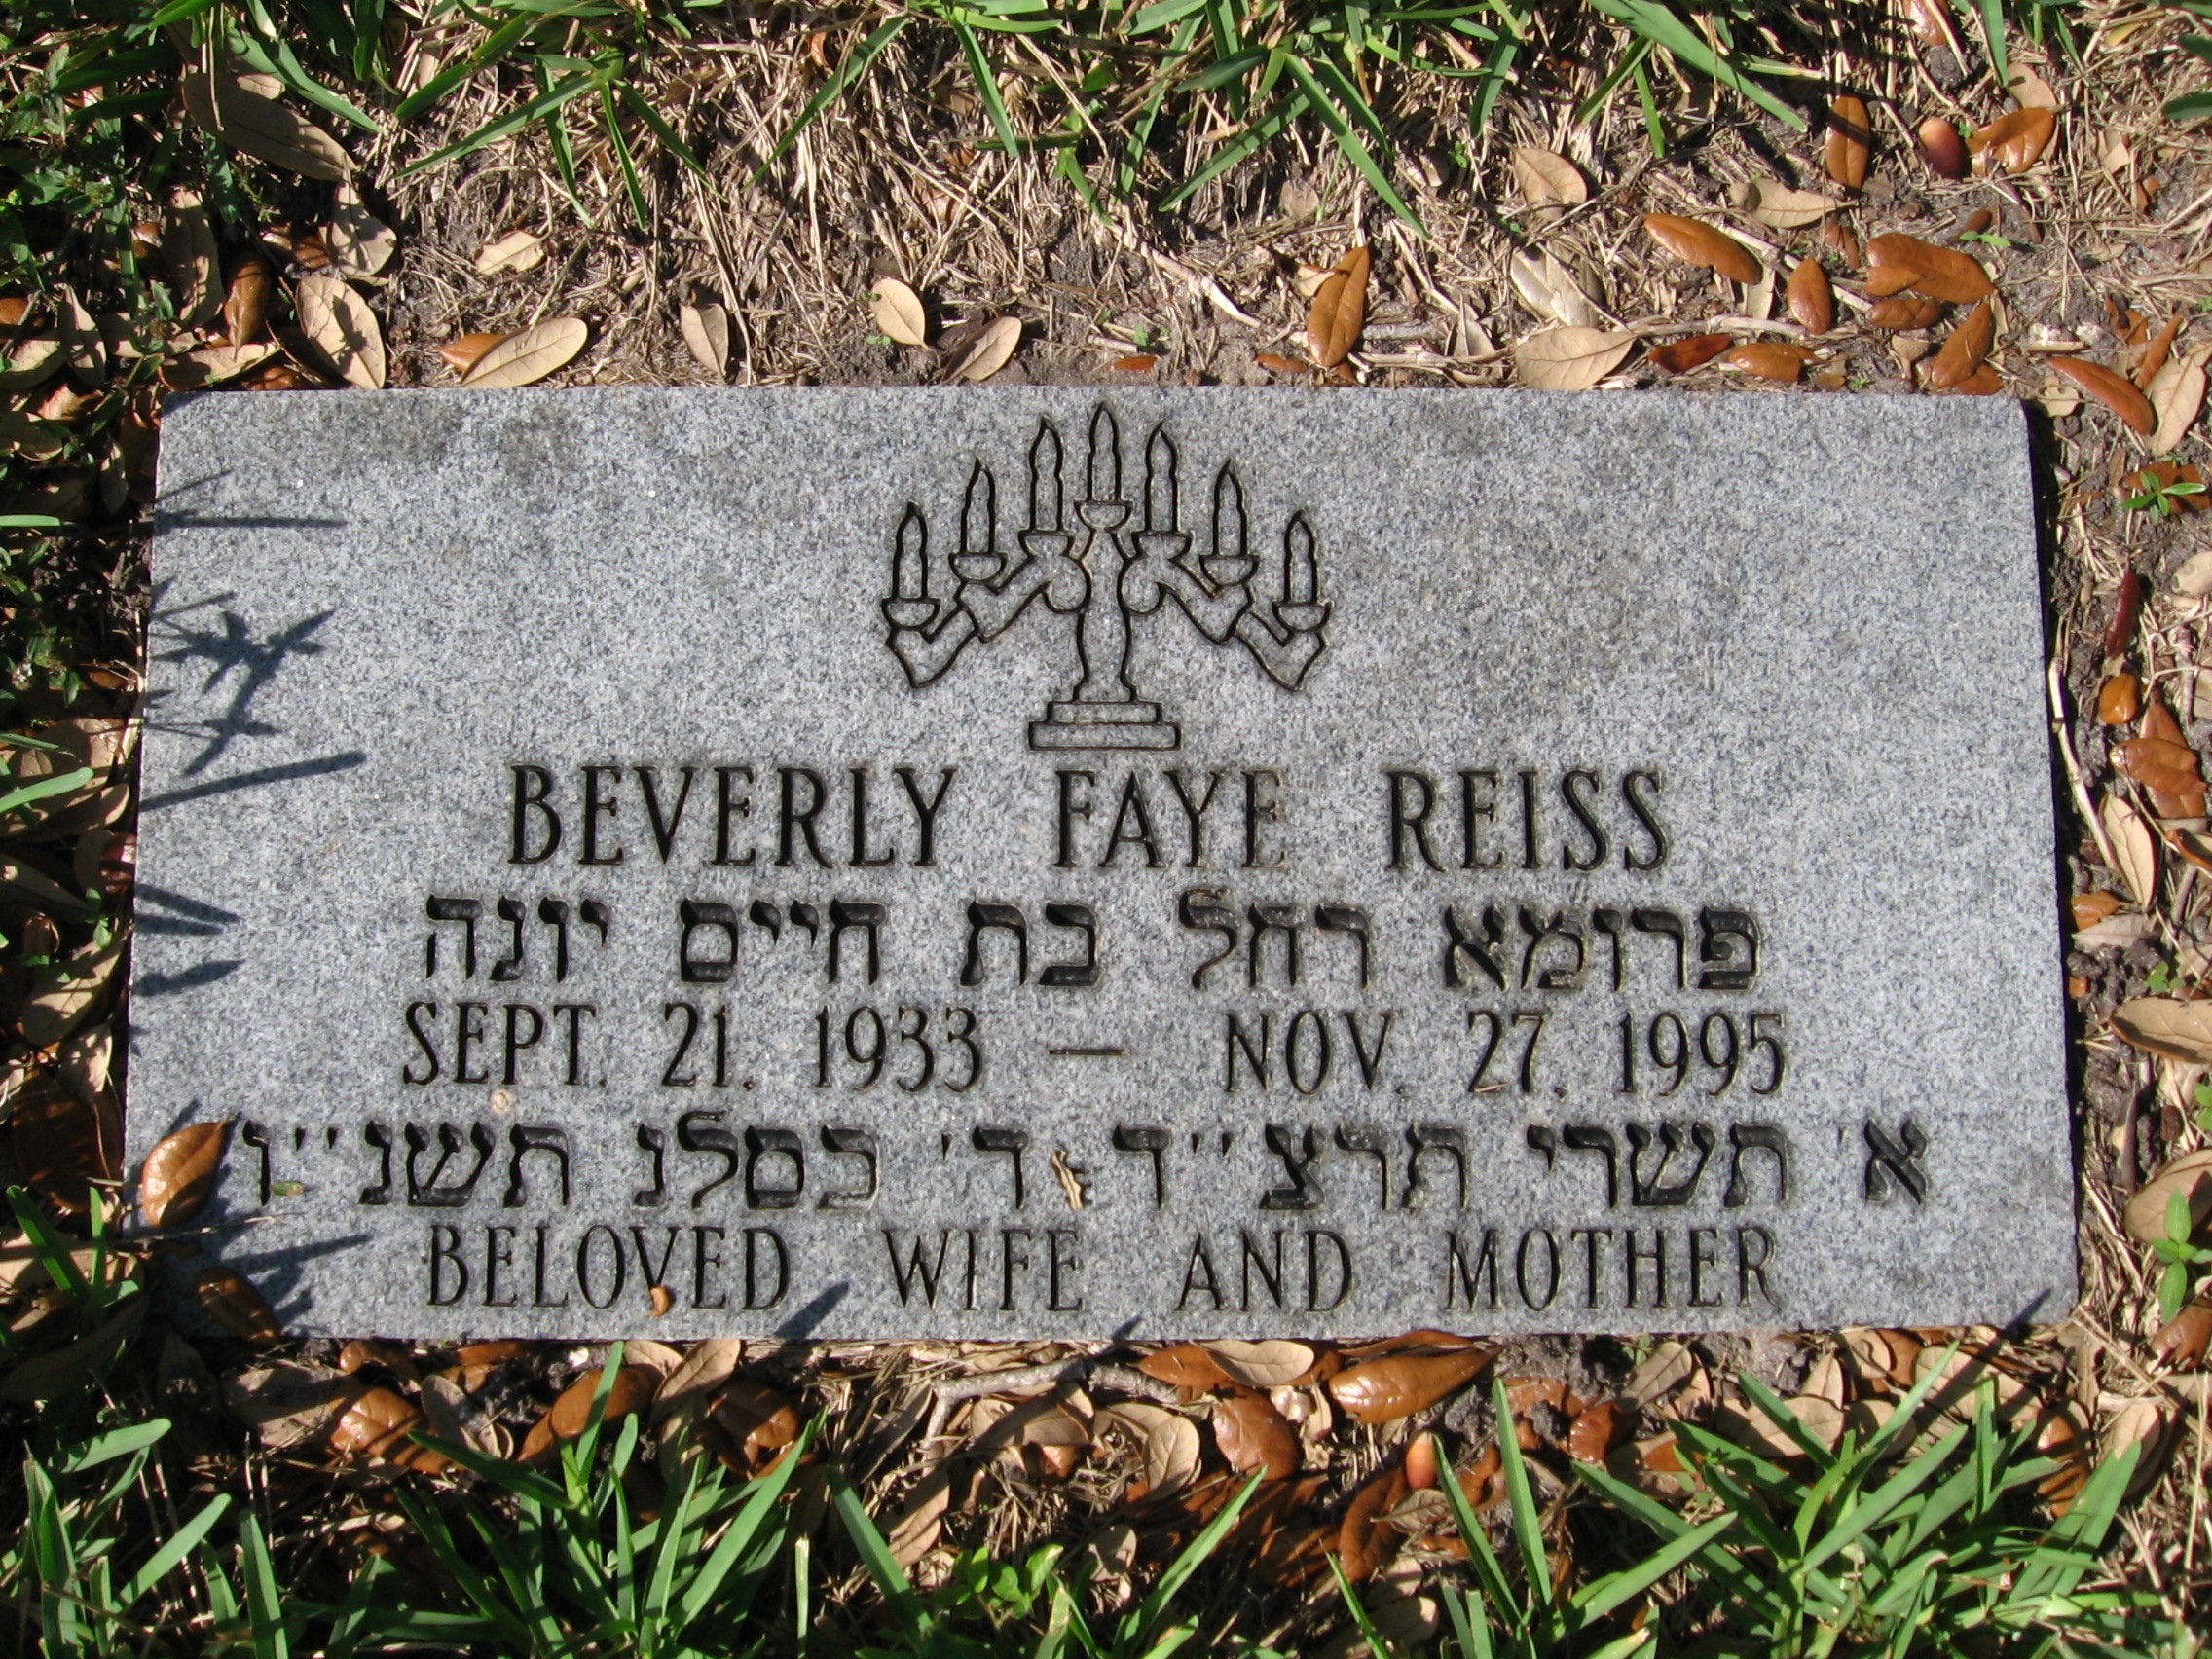 Beverly Faye Reiss